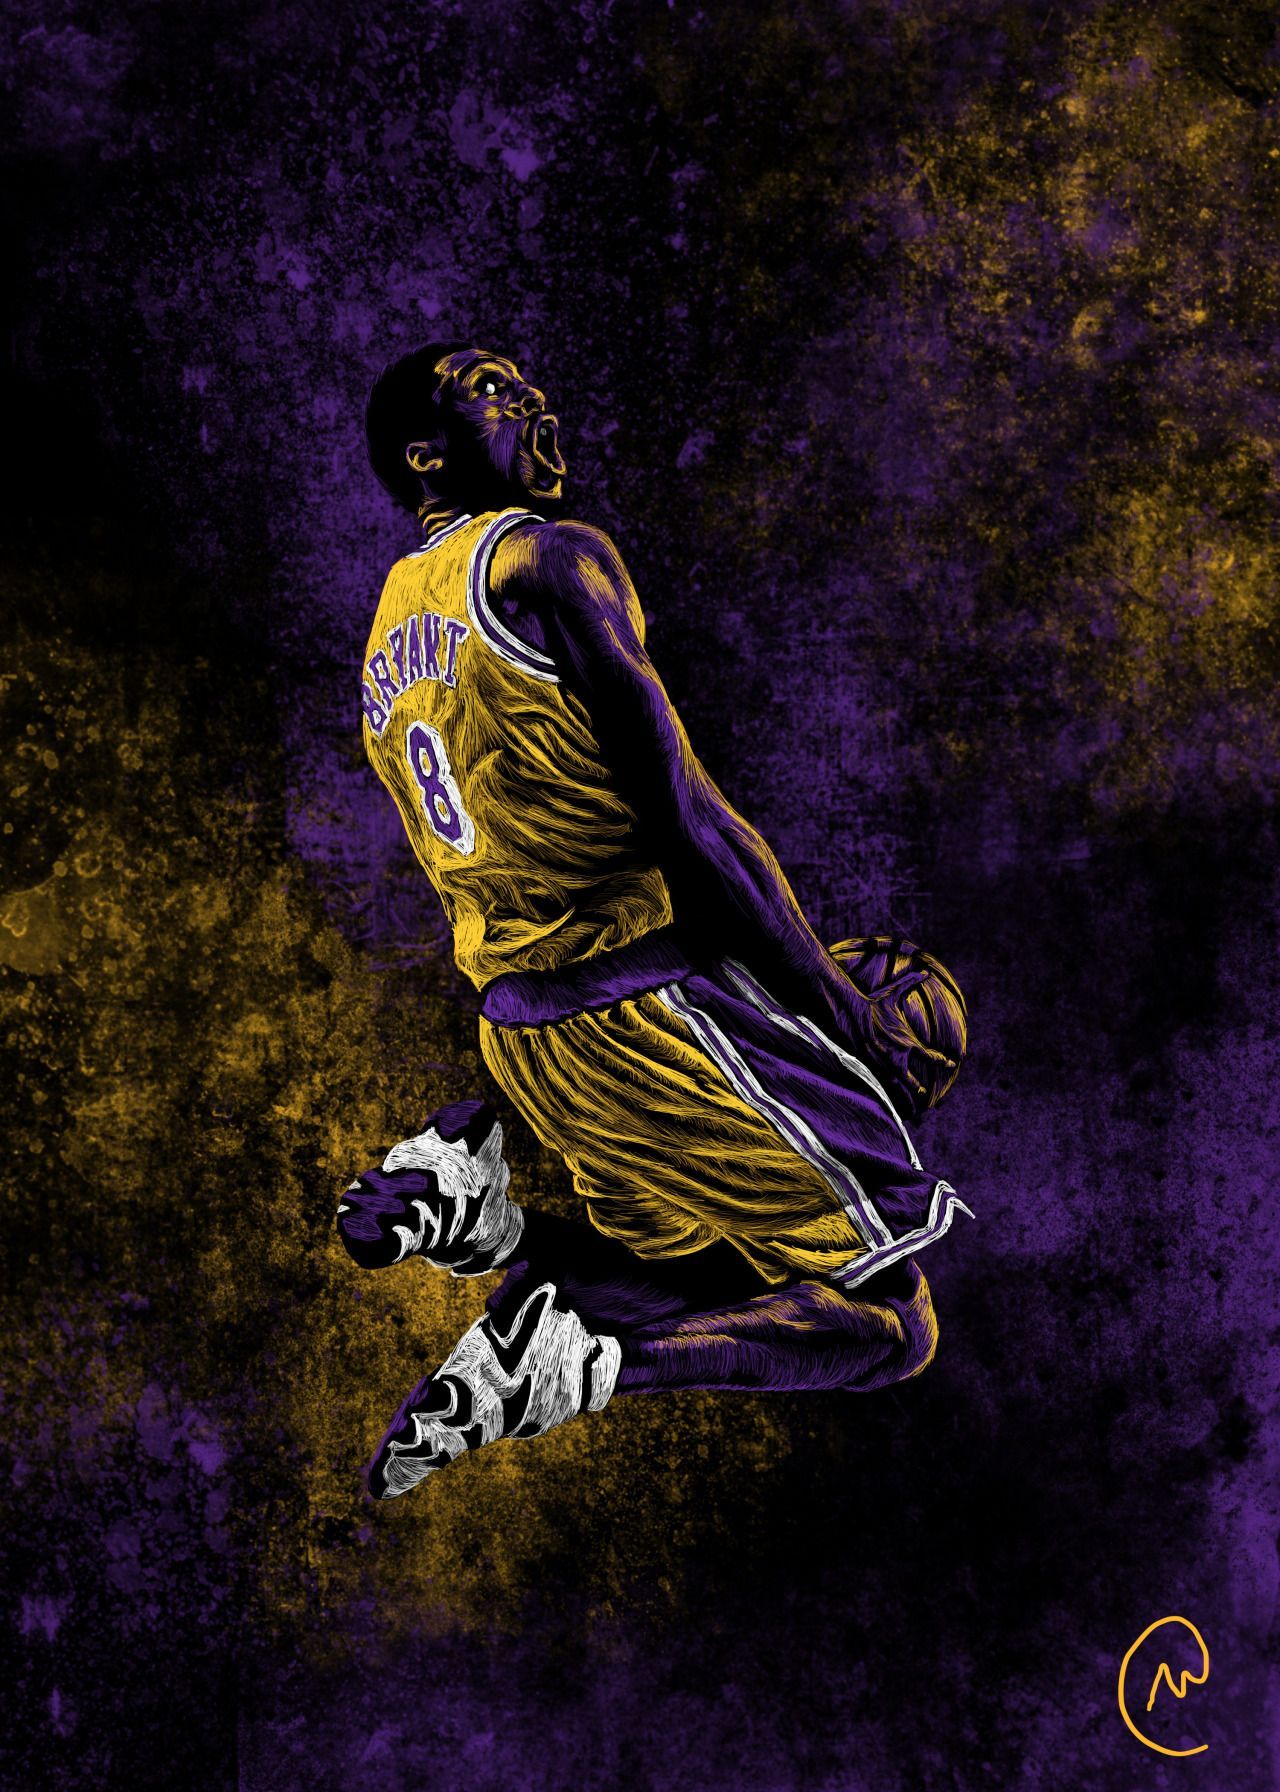 f*ckyeahlakers. Kobe bryant wallpaper, Kobe bryant nba, Lakers wallpaper